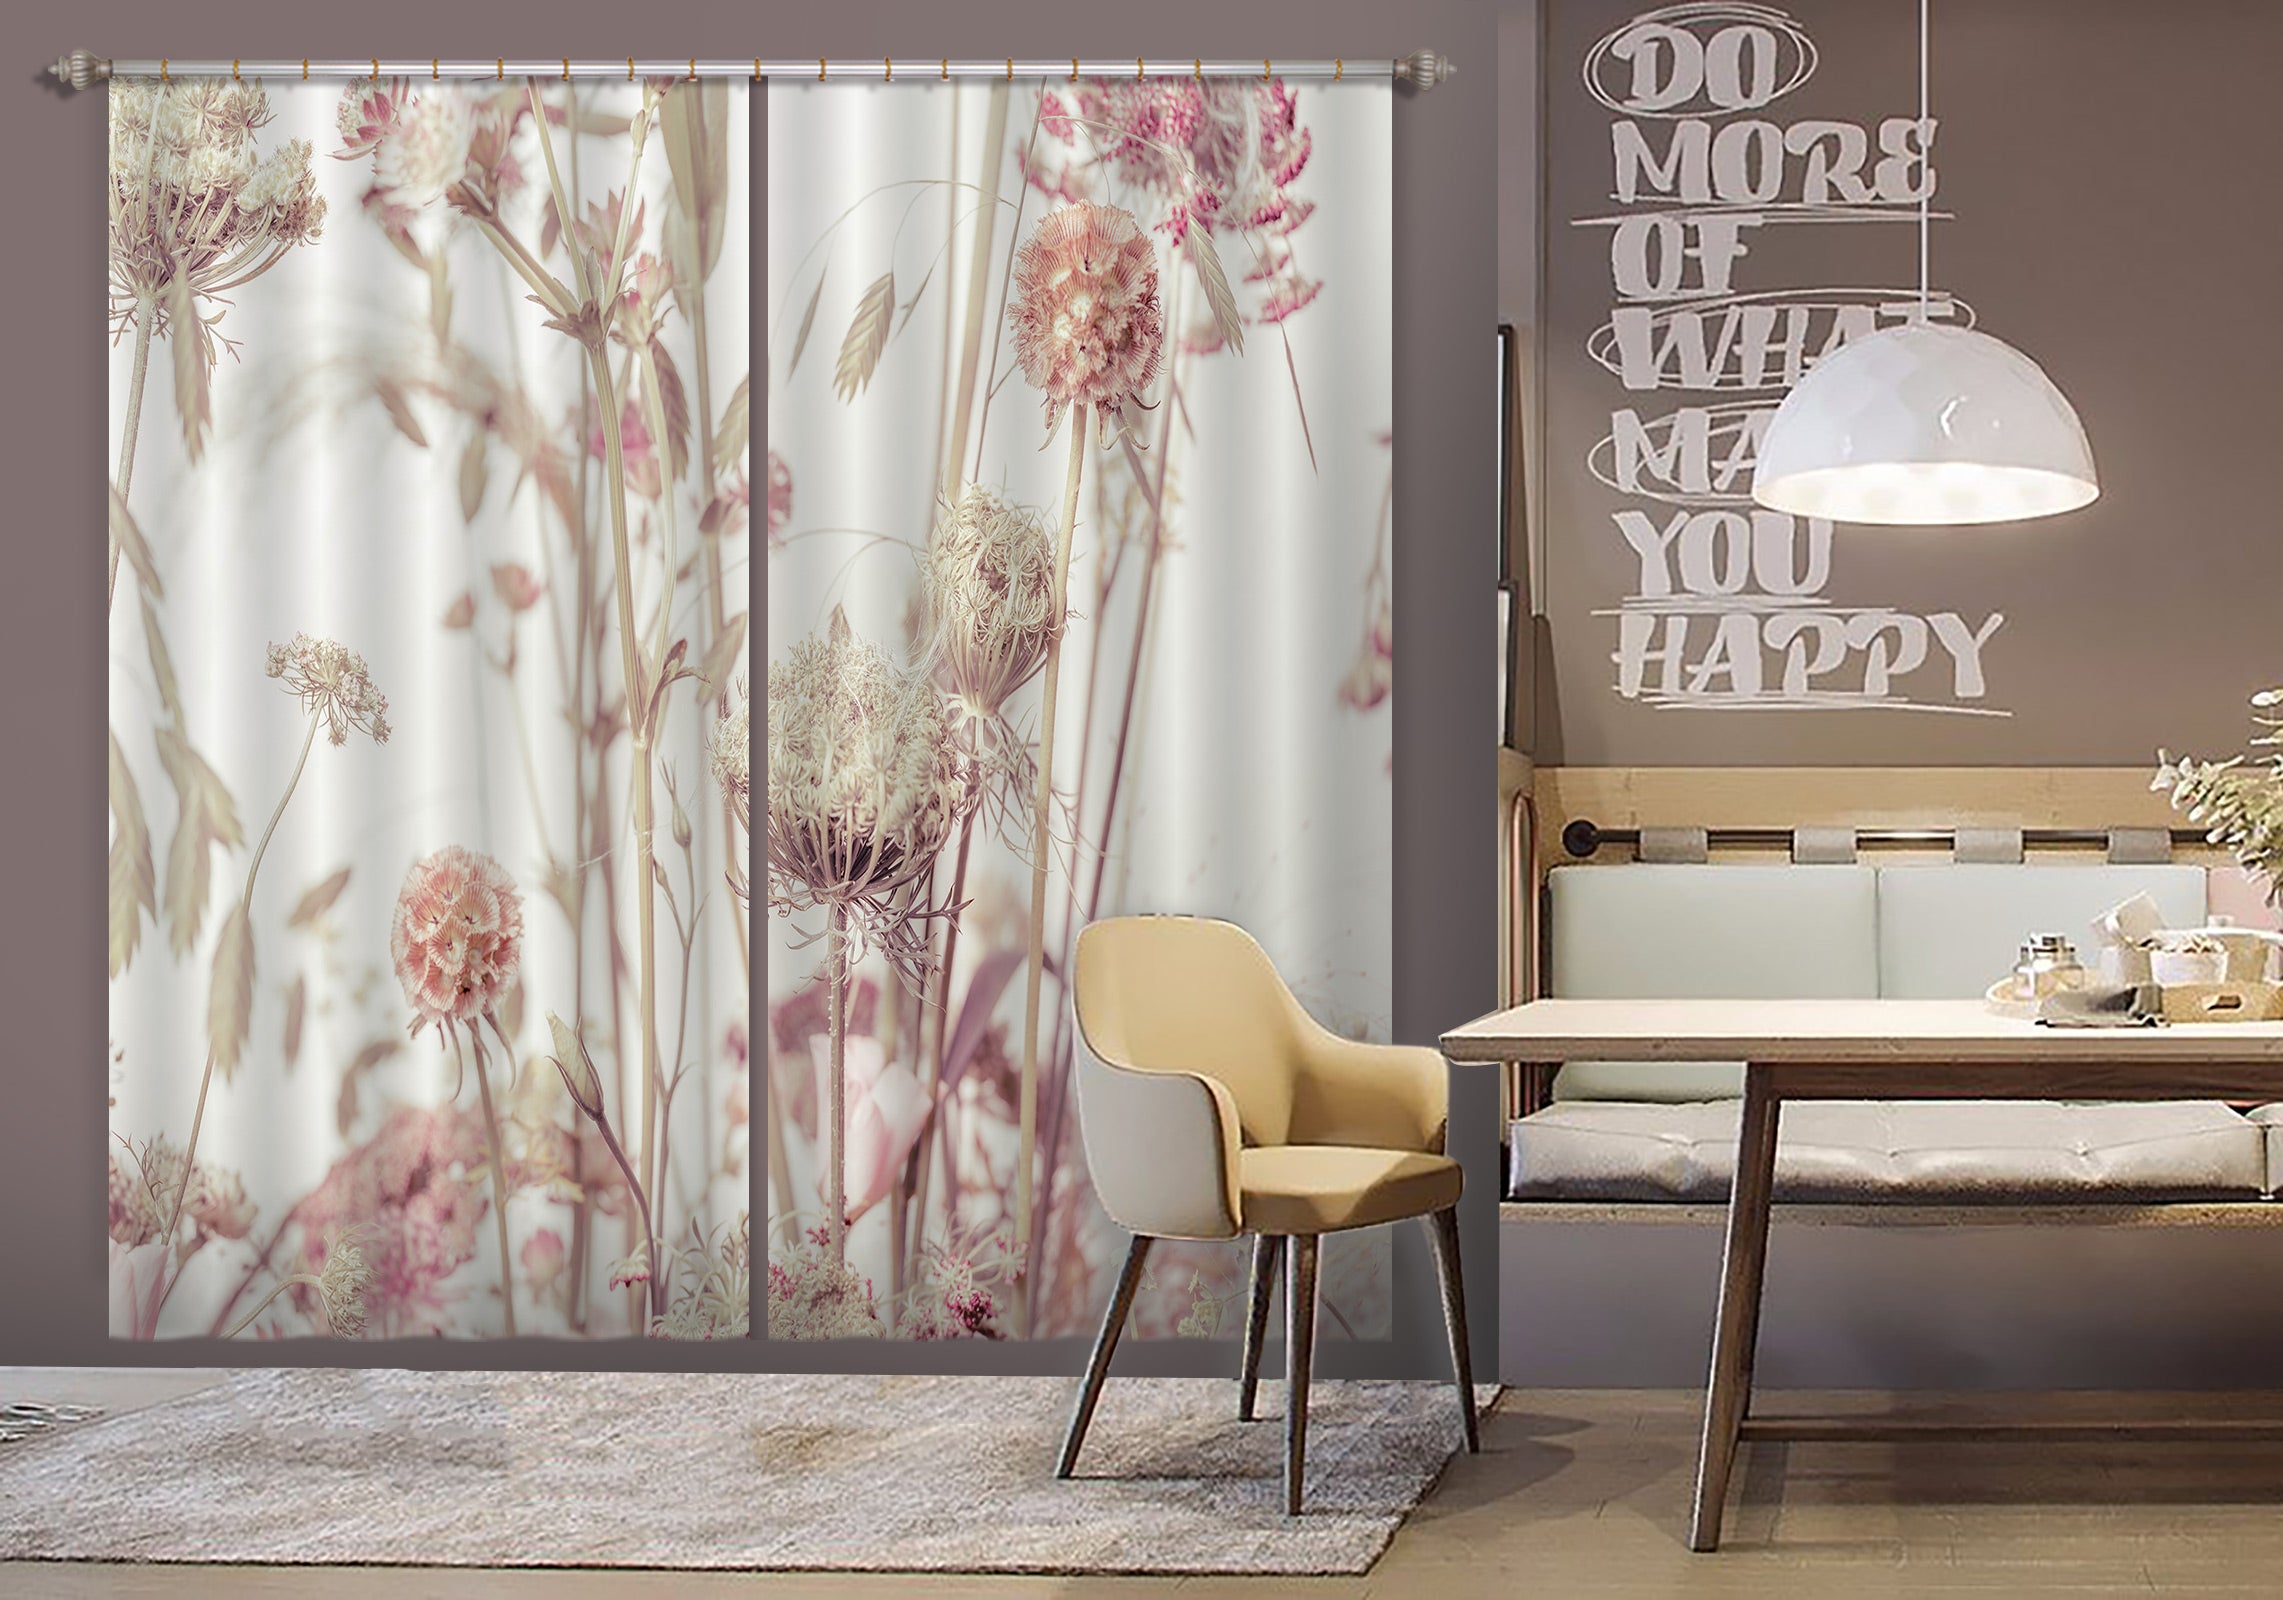 3D Flower Petals 6570 Assaf Frank Curtain Curtains Drapes